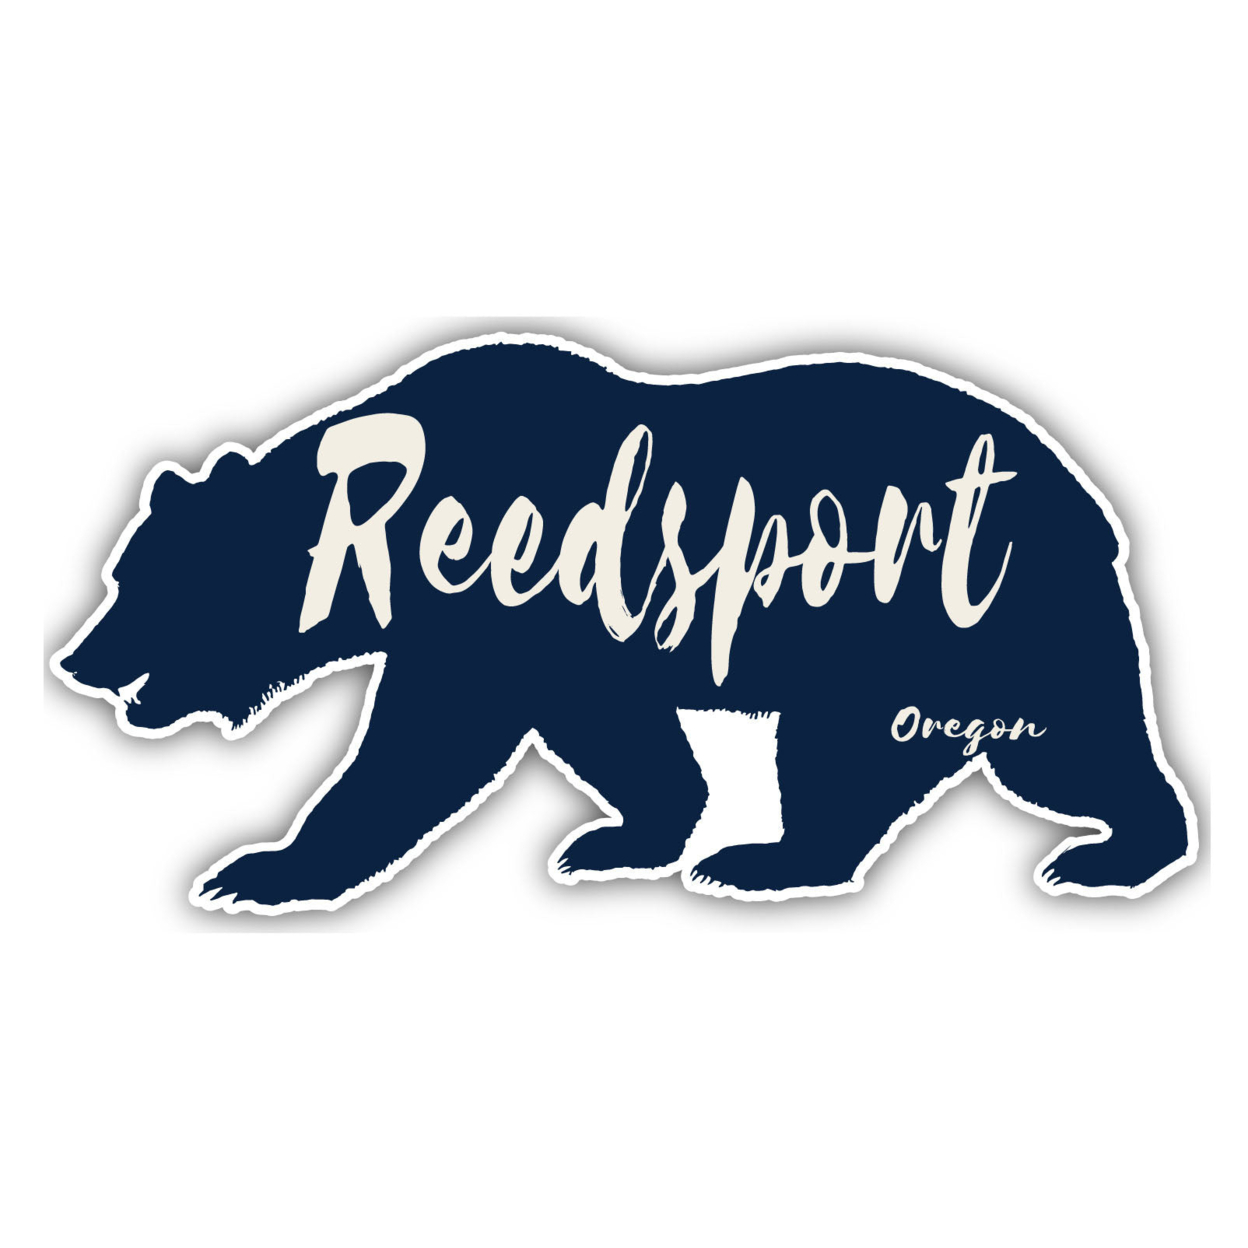 Reedsport Oregon Souvenir Decorative Stickers (Choose Theme And Size) - Single Unit, 4-Inch, Bear